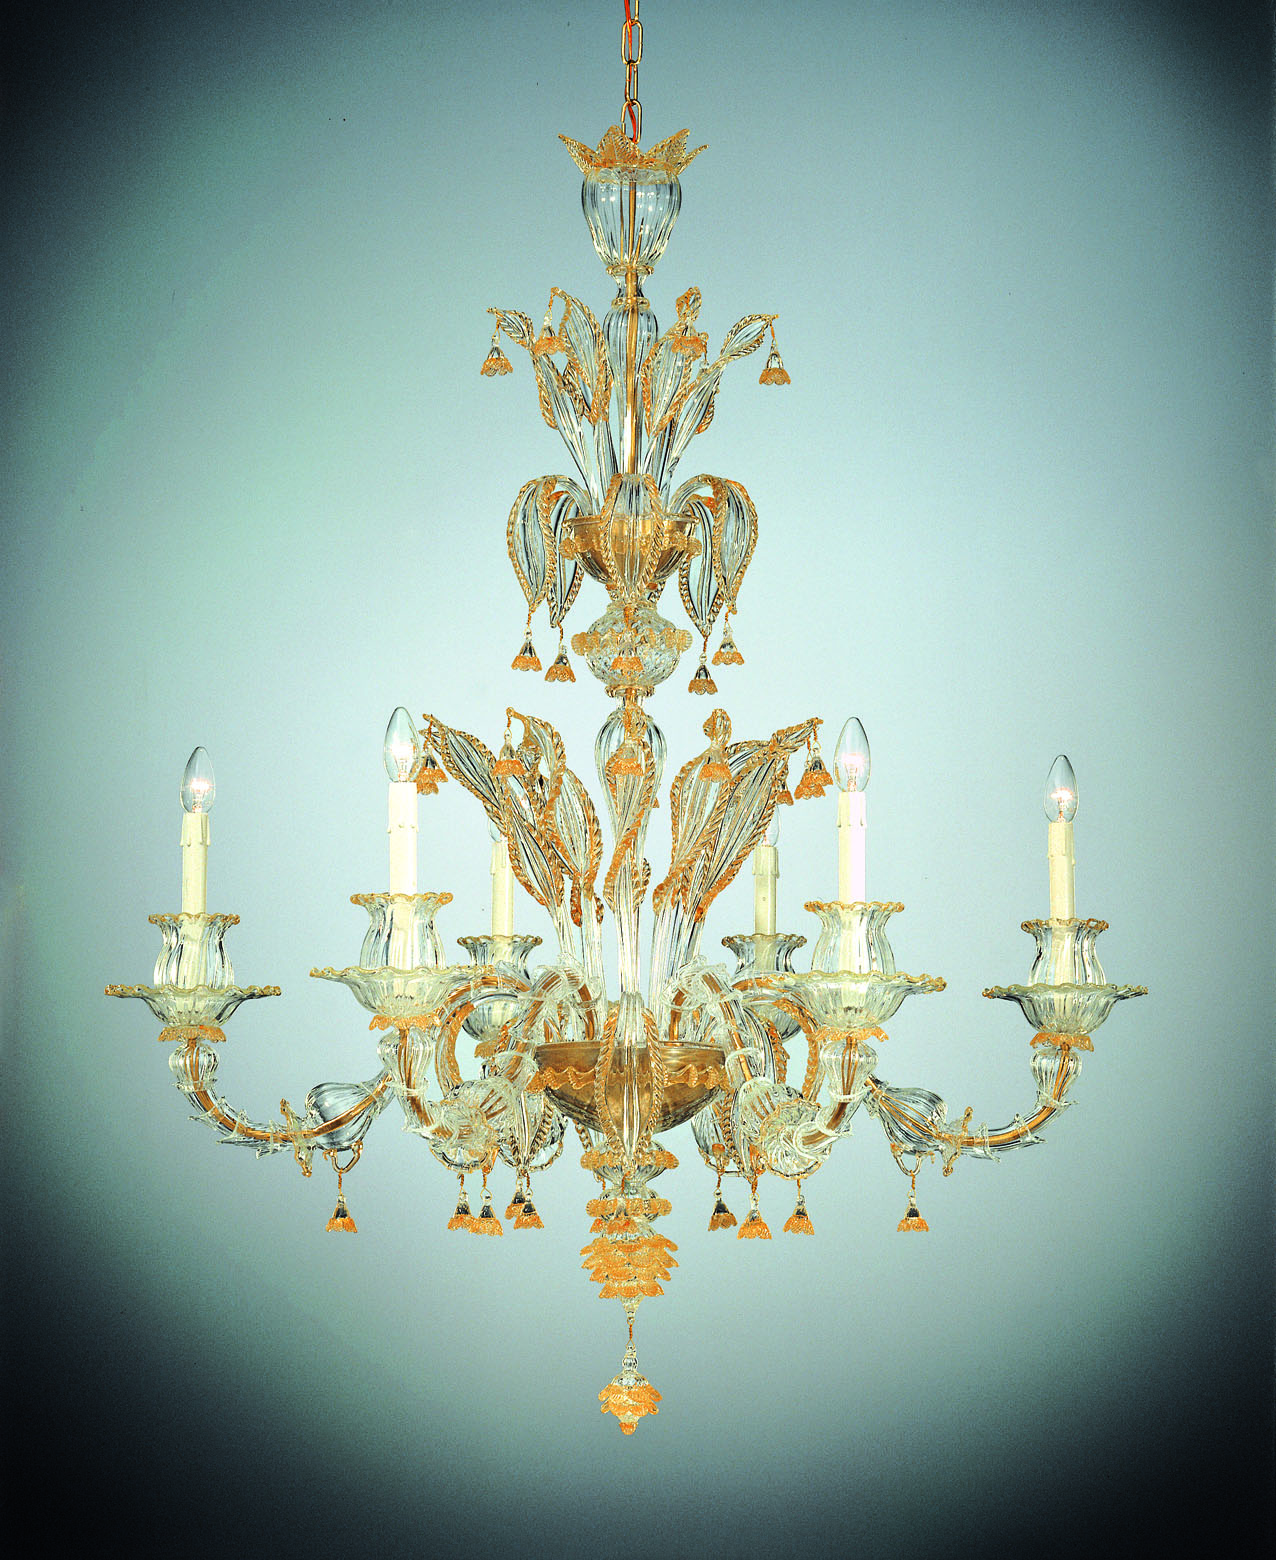 Special Venetian Glass Chandelier “Geremia” With 6 Lights – Murano Art